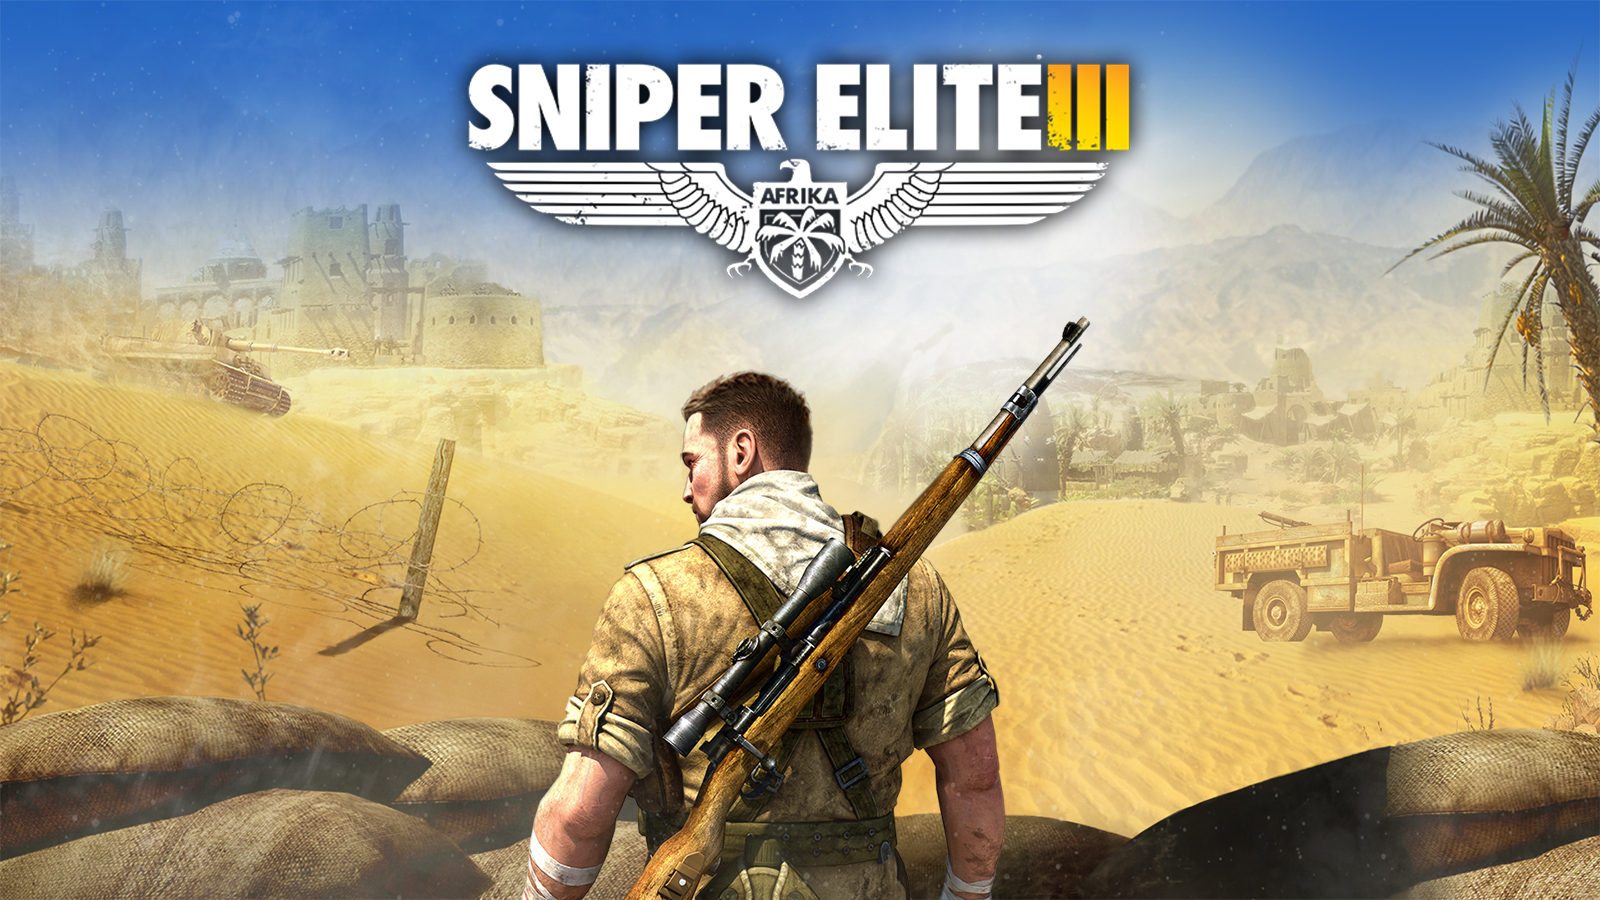 Sniper Elite 3 Backgrounds, Compatible - PC, Mobile, Gadgets| 1600x900 px